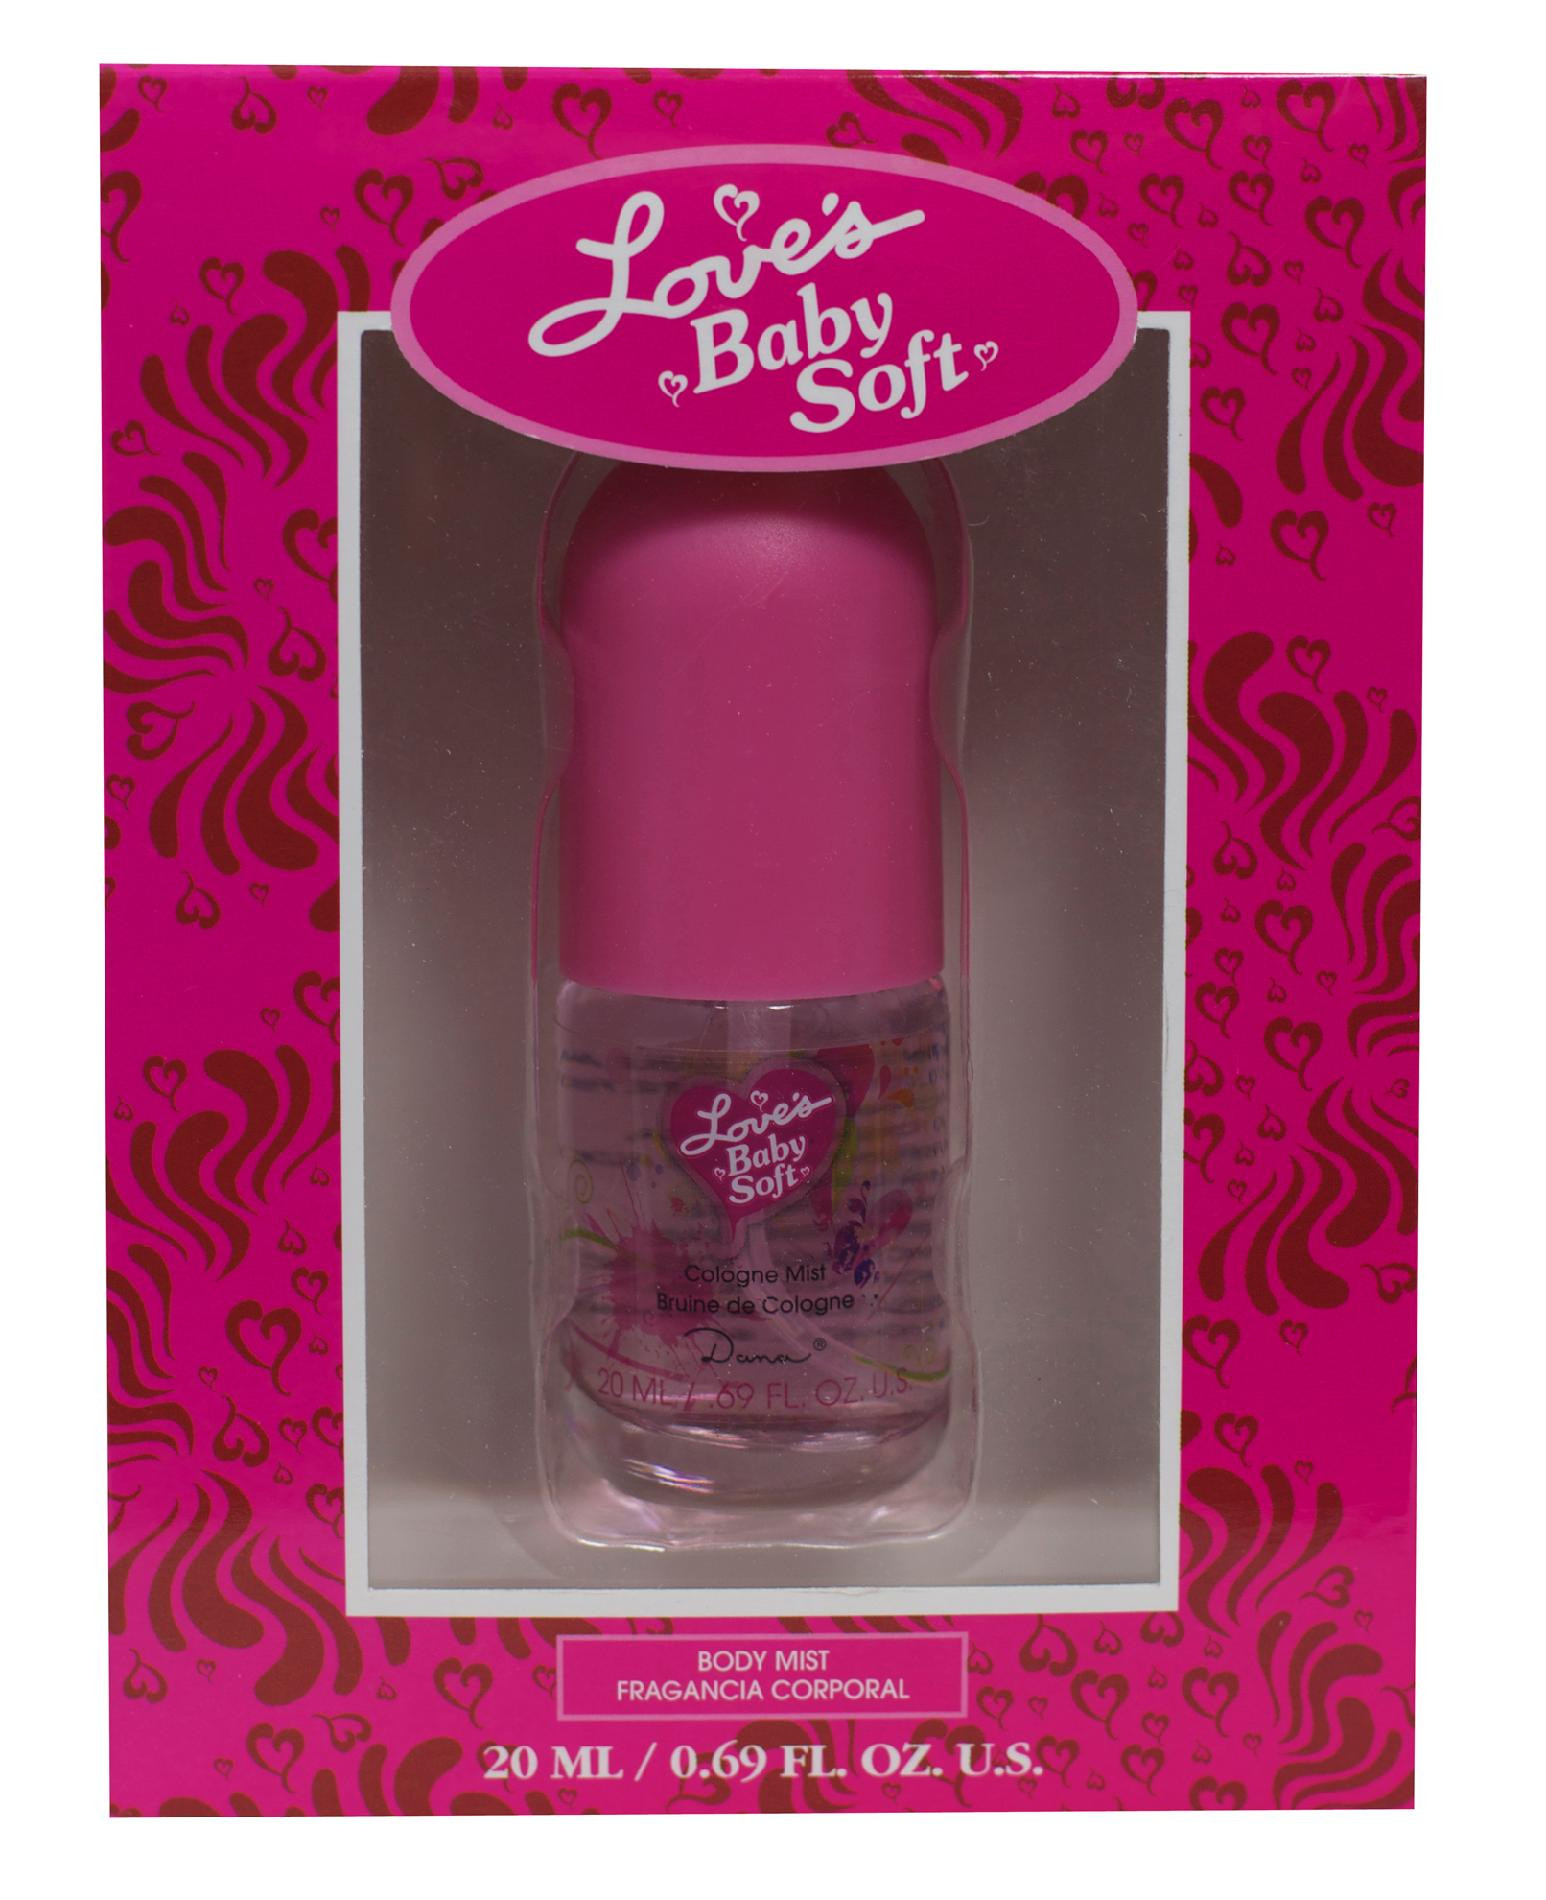 Loves Baby Soft Perfume Gift Set
 Love s Baby Soft Body Mist Cologne Spray 0 69 oz